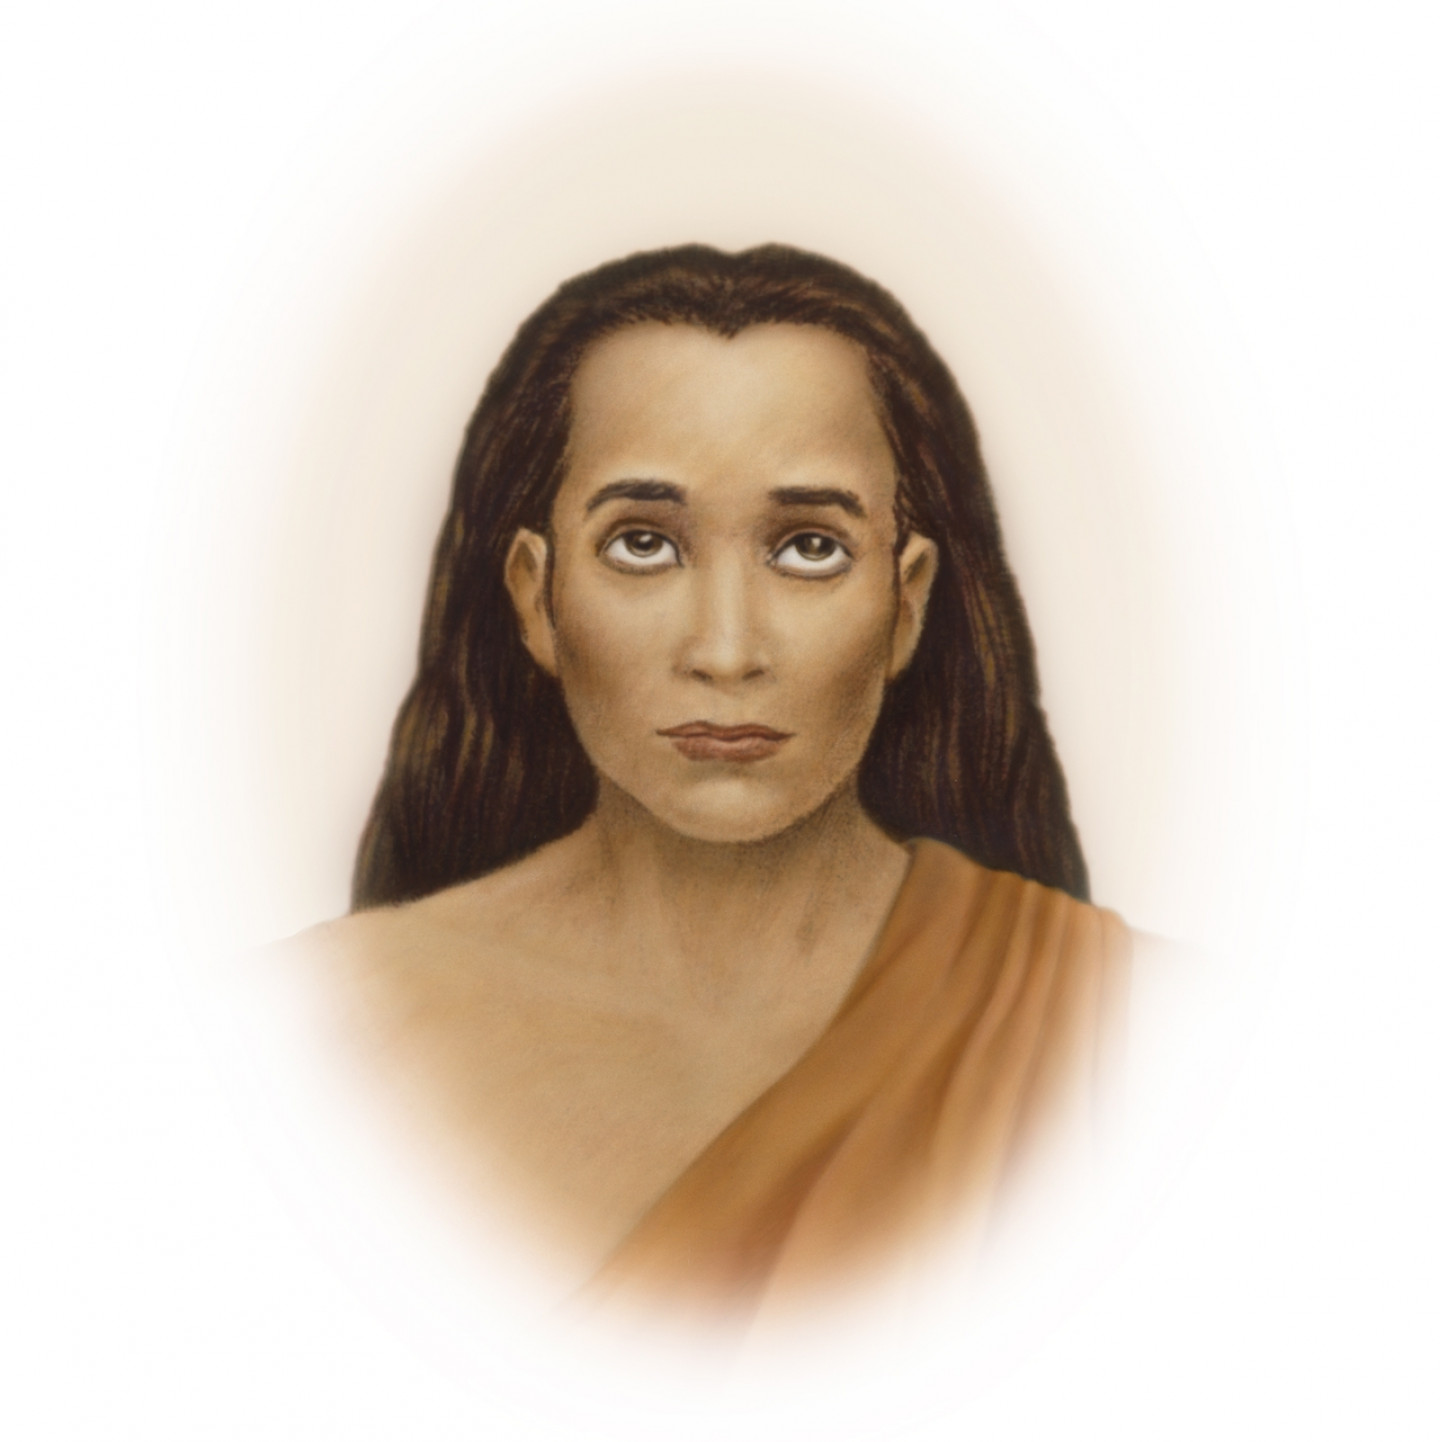 Mahavatar Babaji